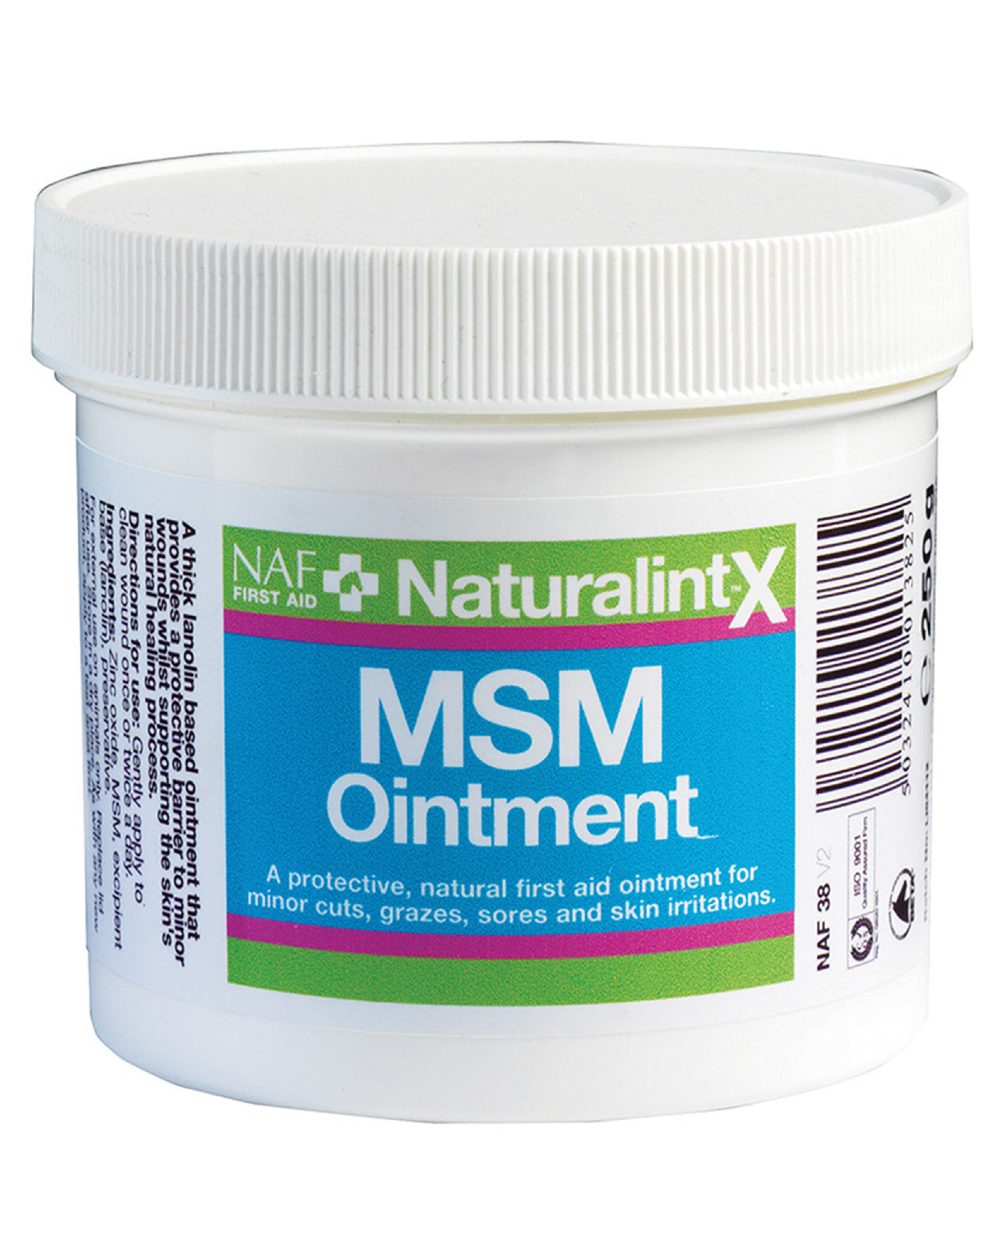 NAF Naturalintx Msm Ointment 250g on white background